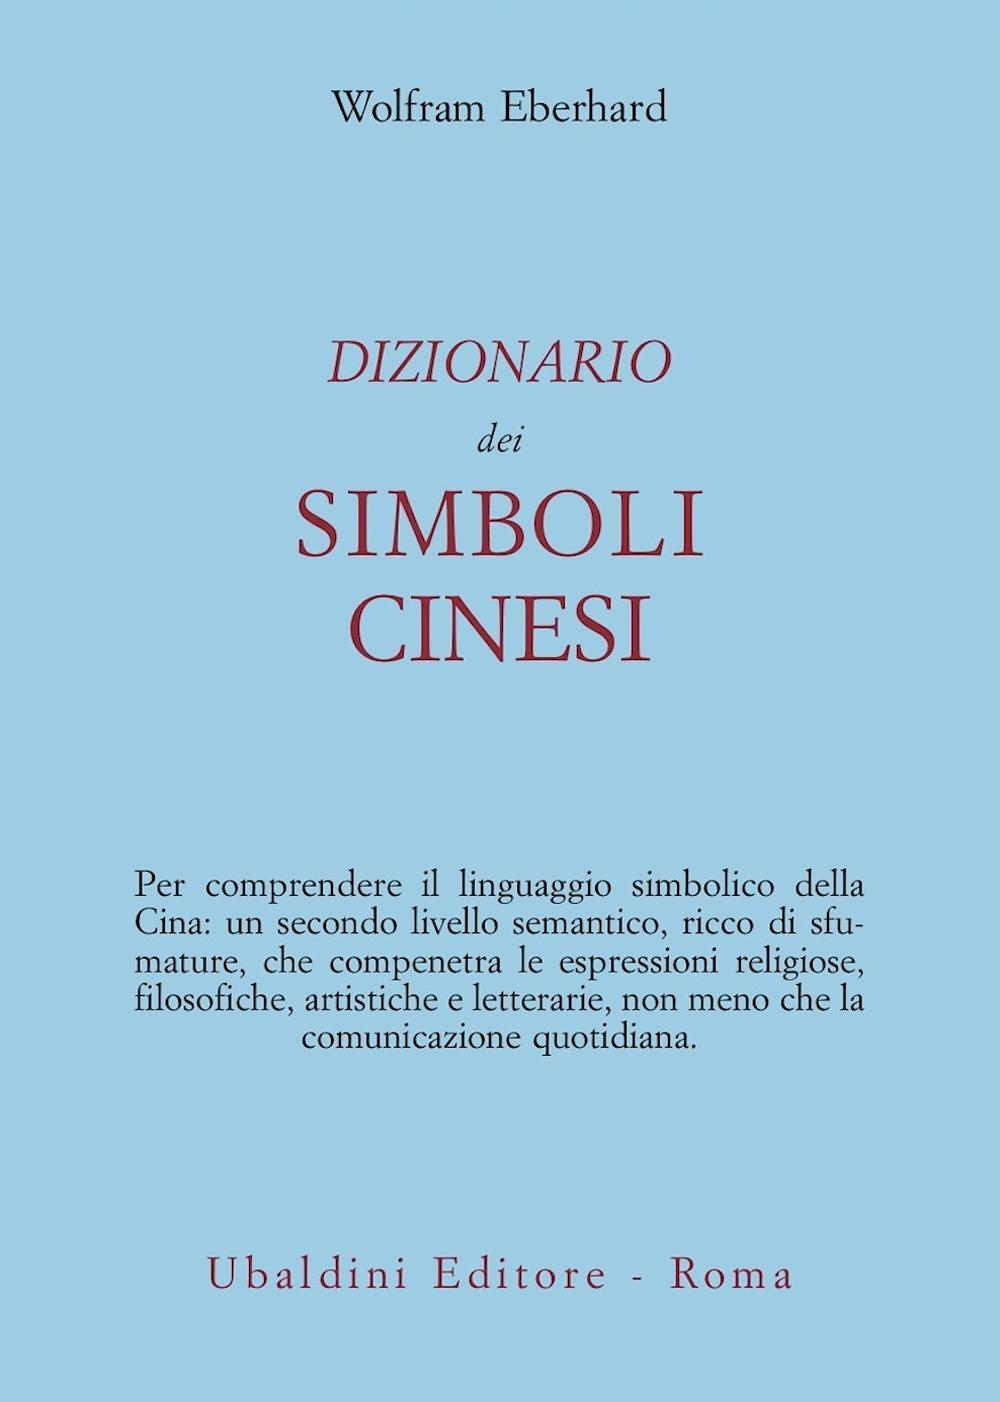 Image of Dizionario dei simboli cinesi